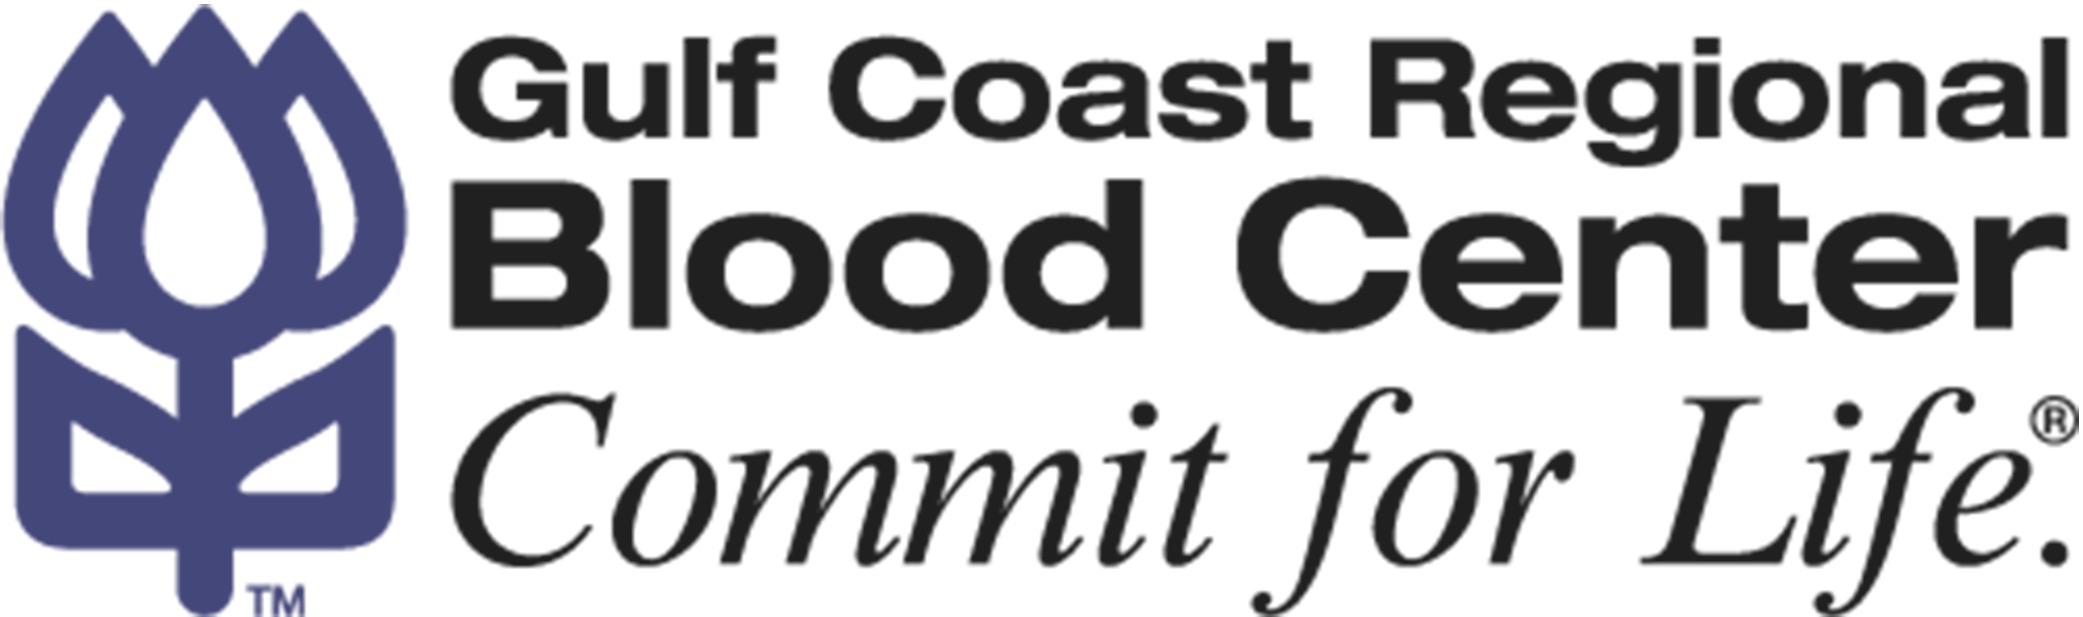 Gluf Coast Regional Blood Center